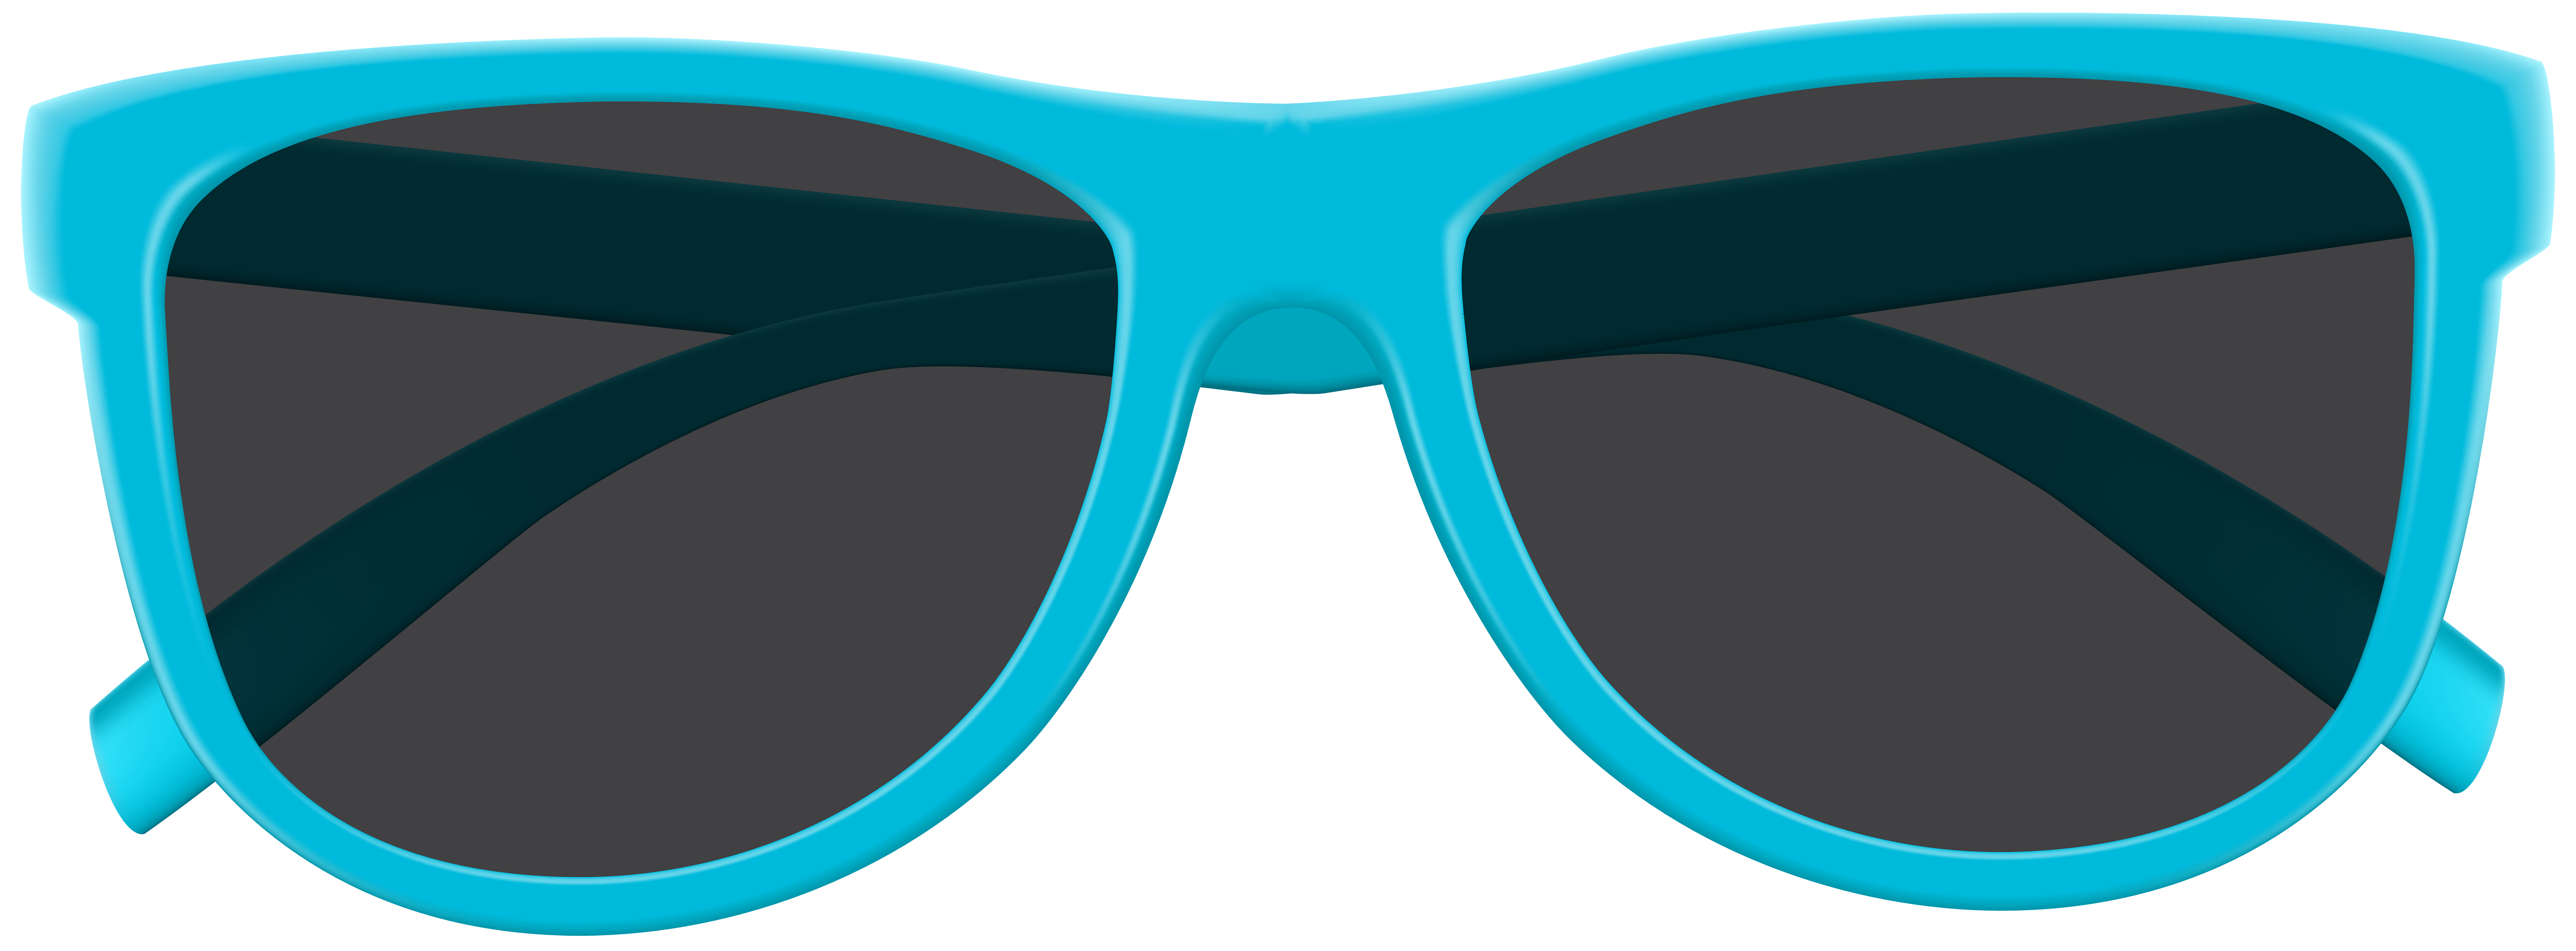 Blue Goggles Sunglasses Free HD Image Clipart